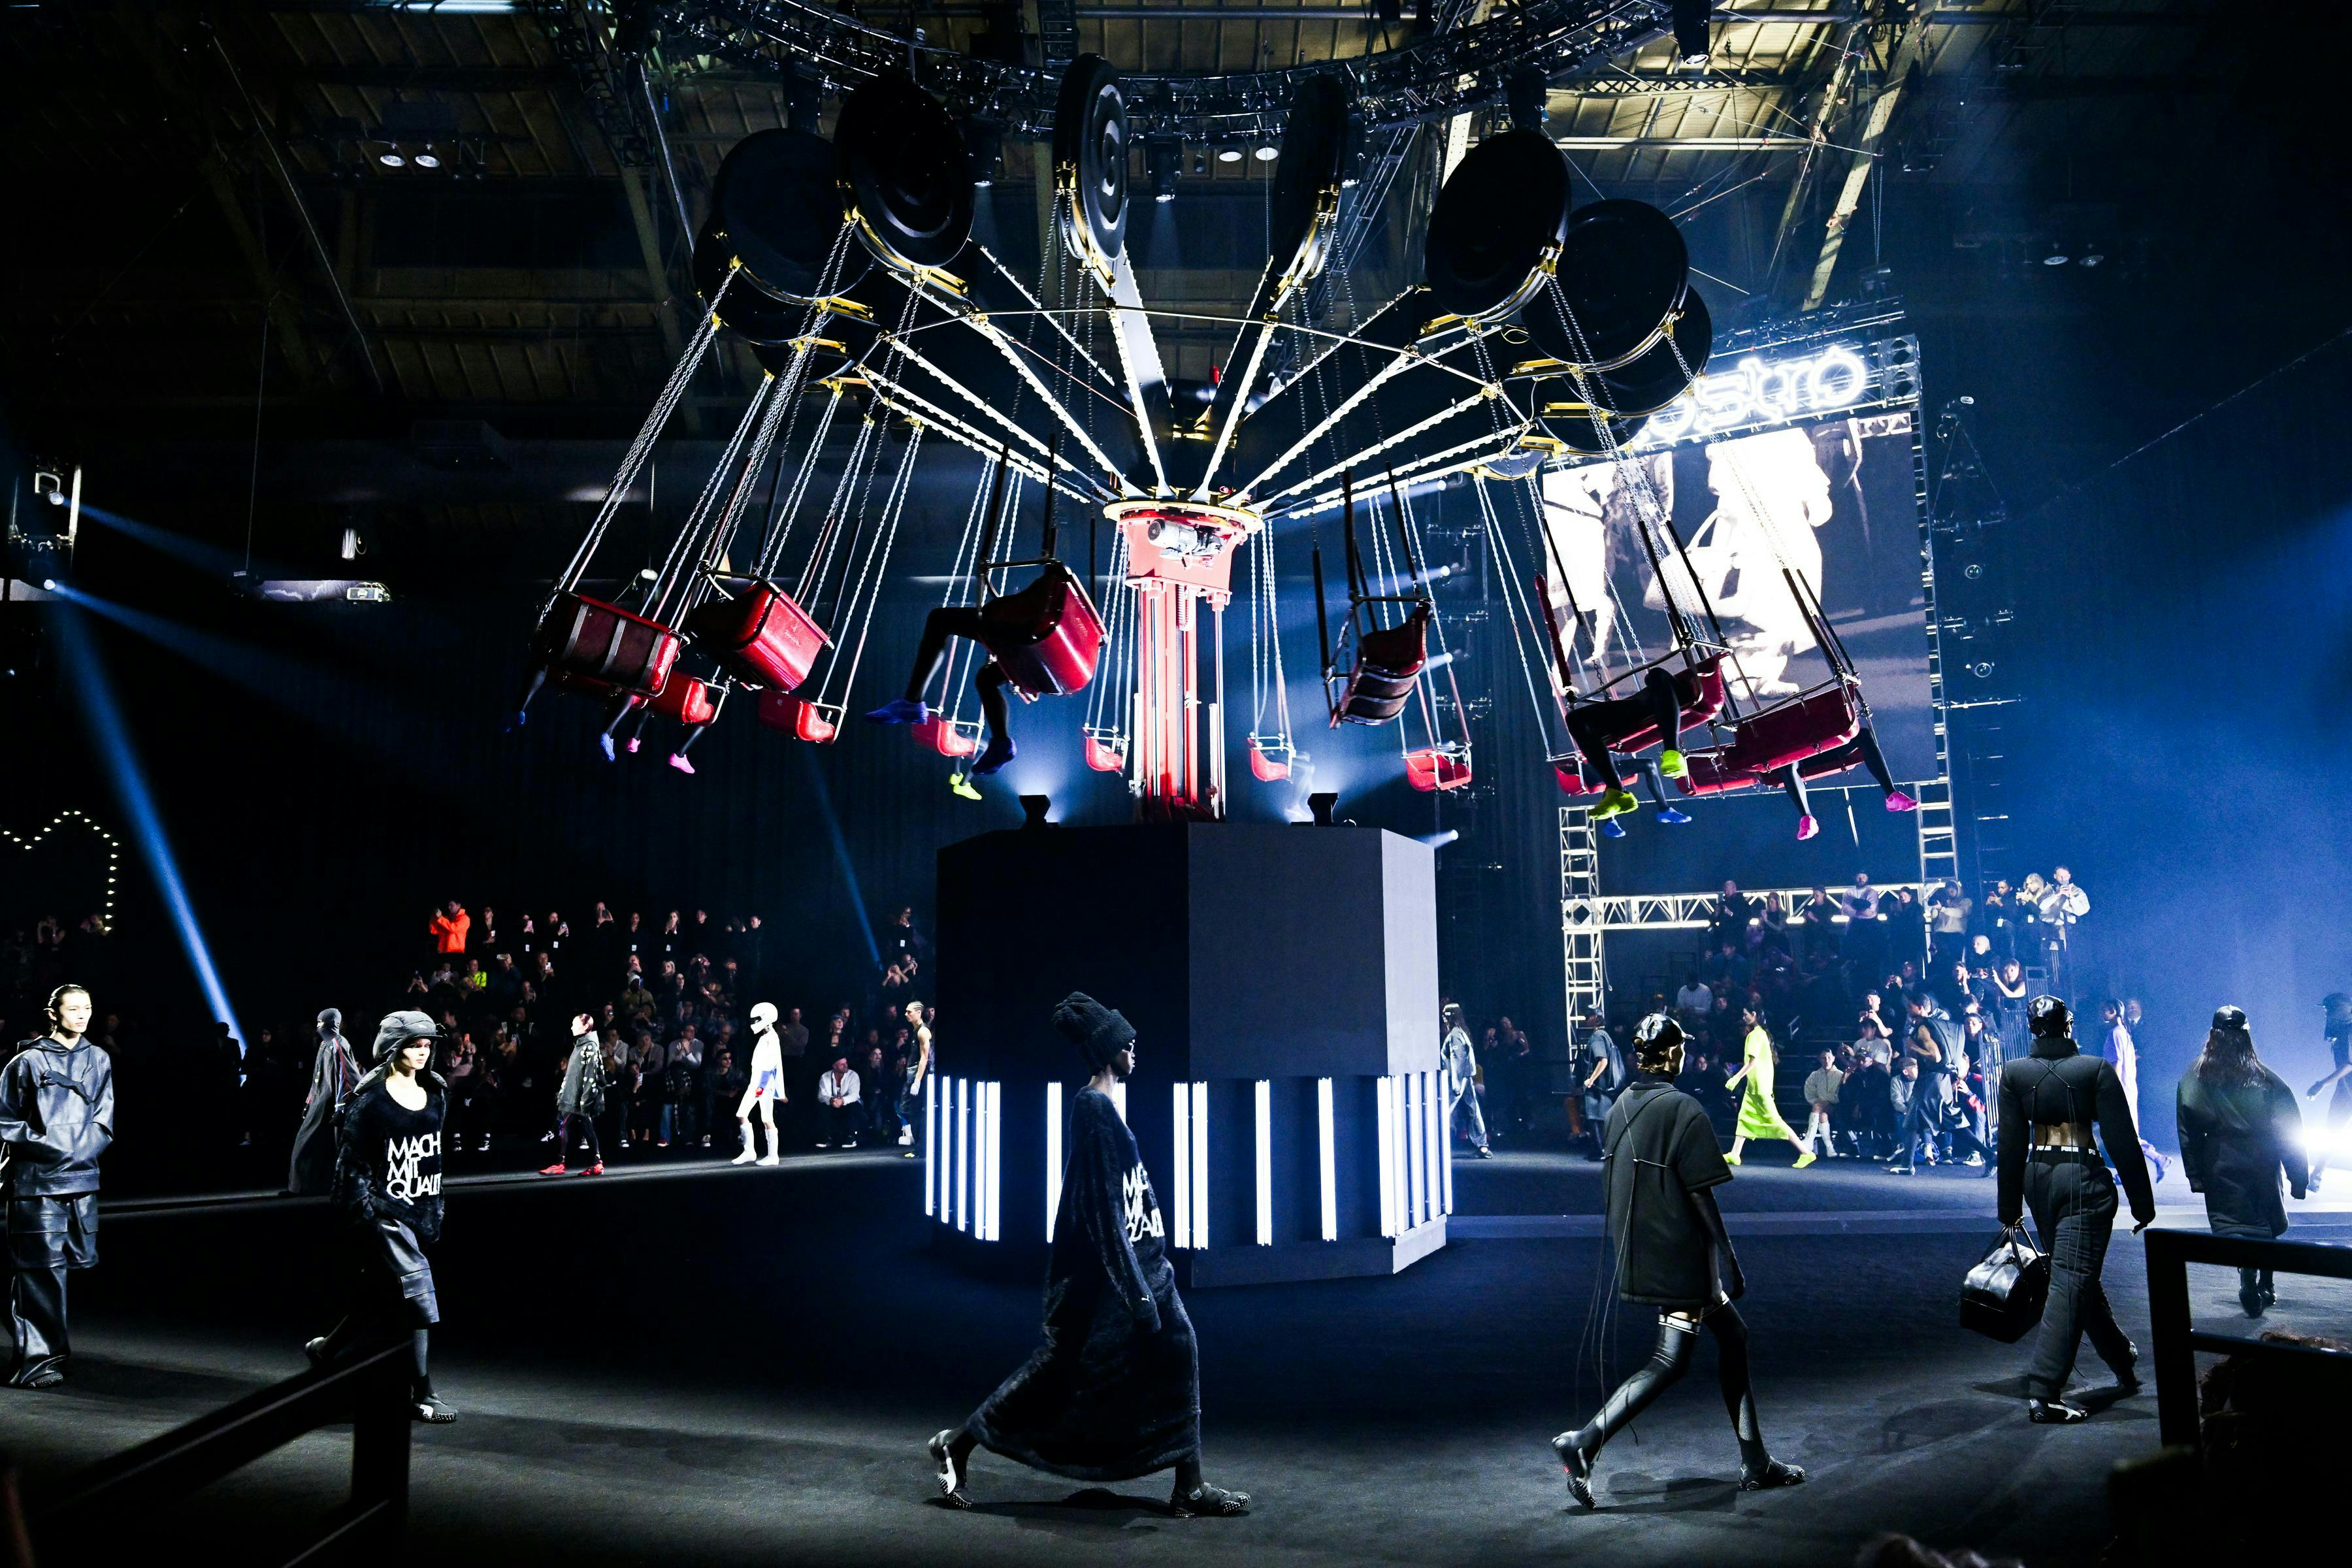 horizontal, **puma** manhattan new york lighting stage concert crowd person handbag shoe people group performance urban